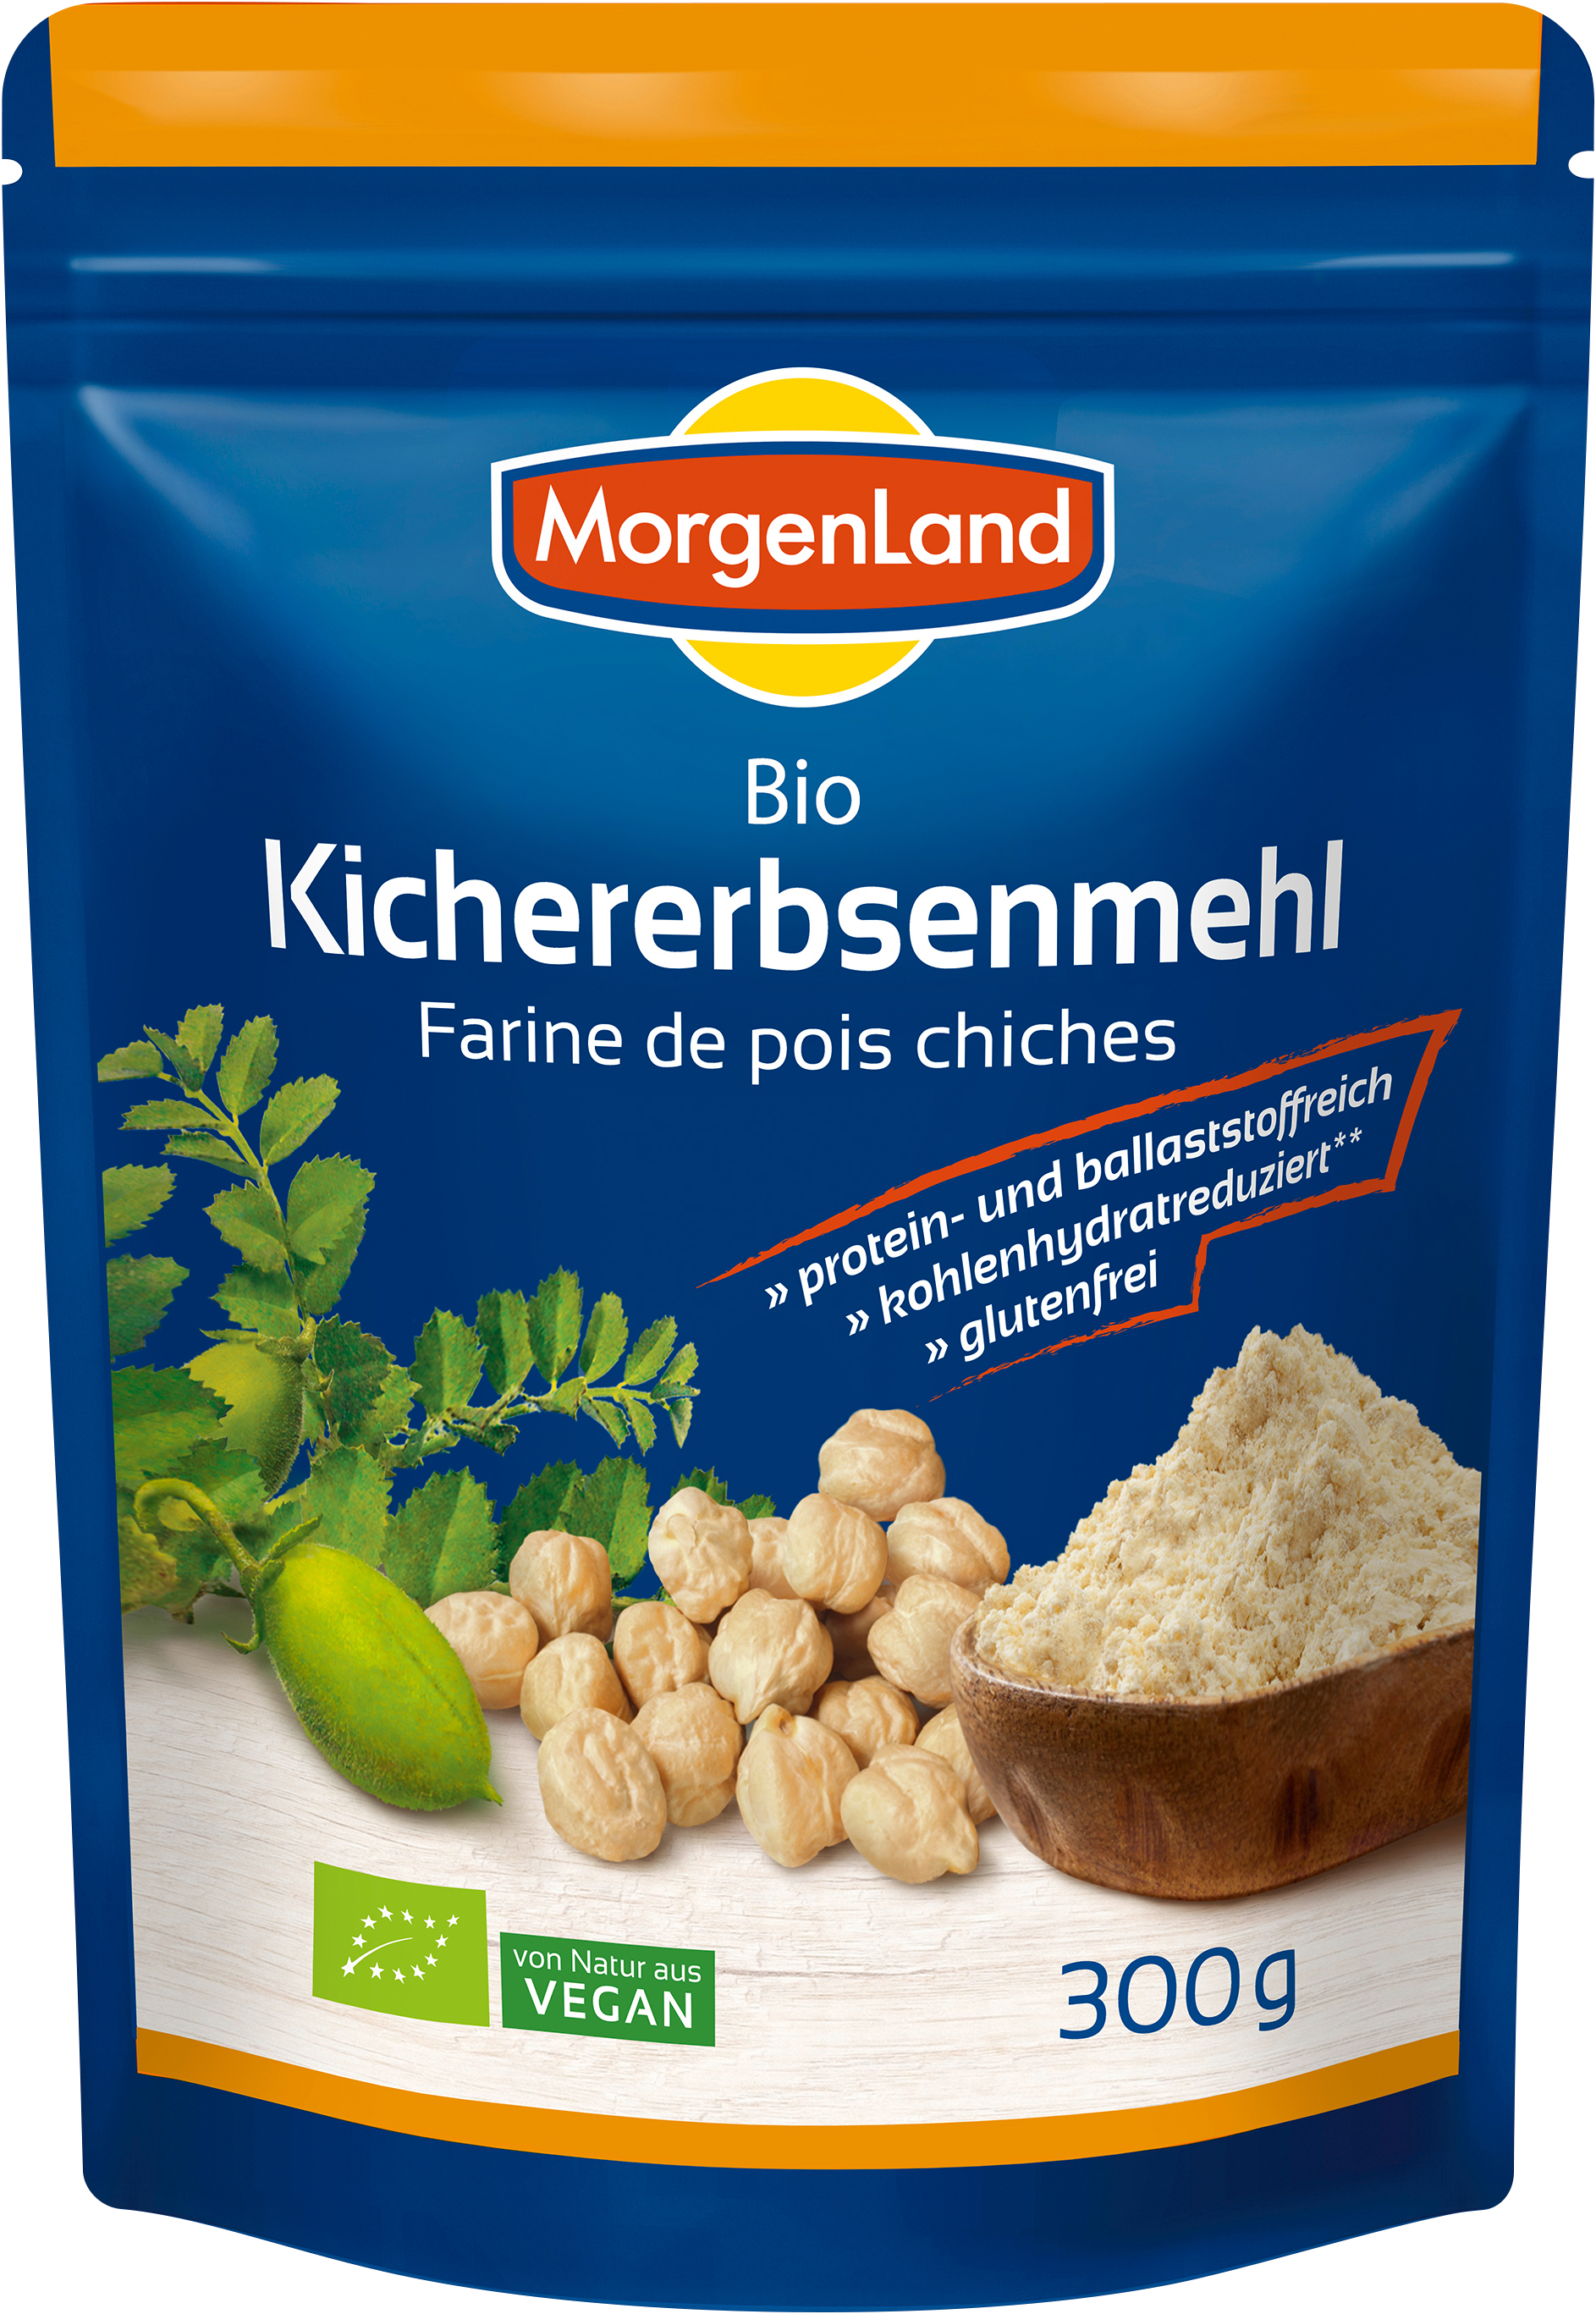 MorgenLand Kichererbsenmehl 300g/A